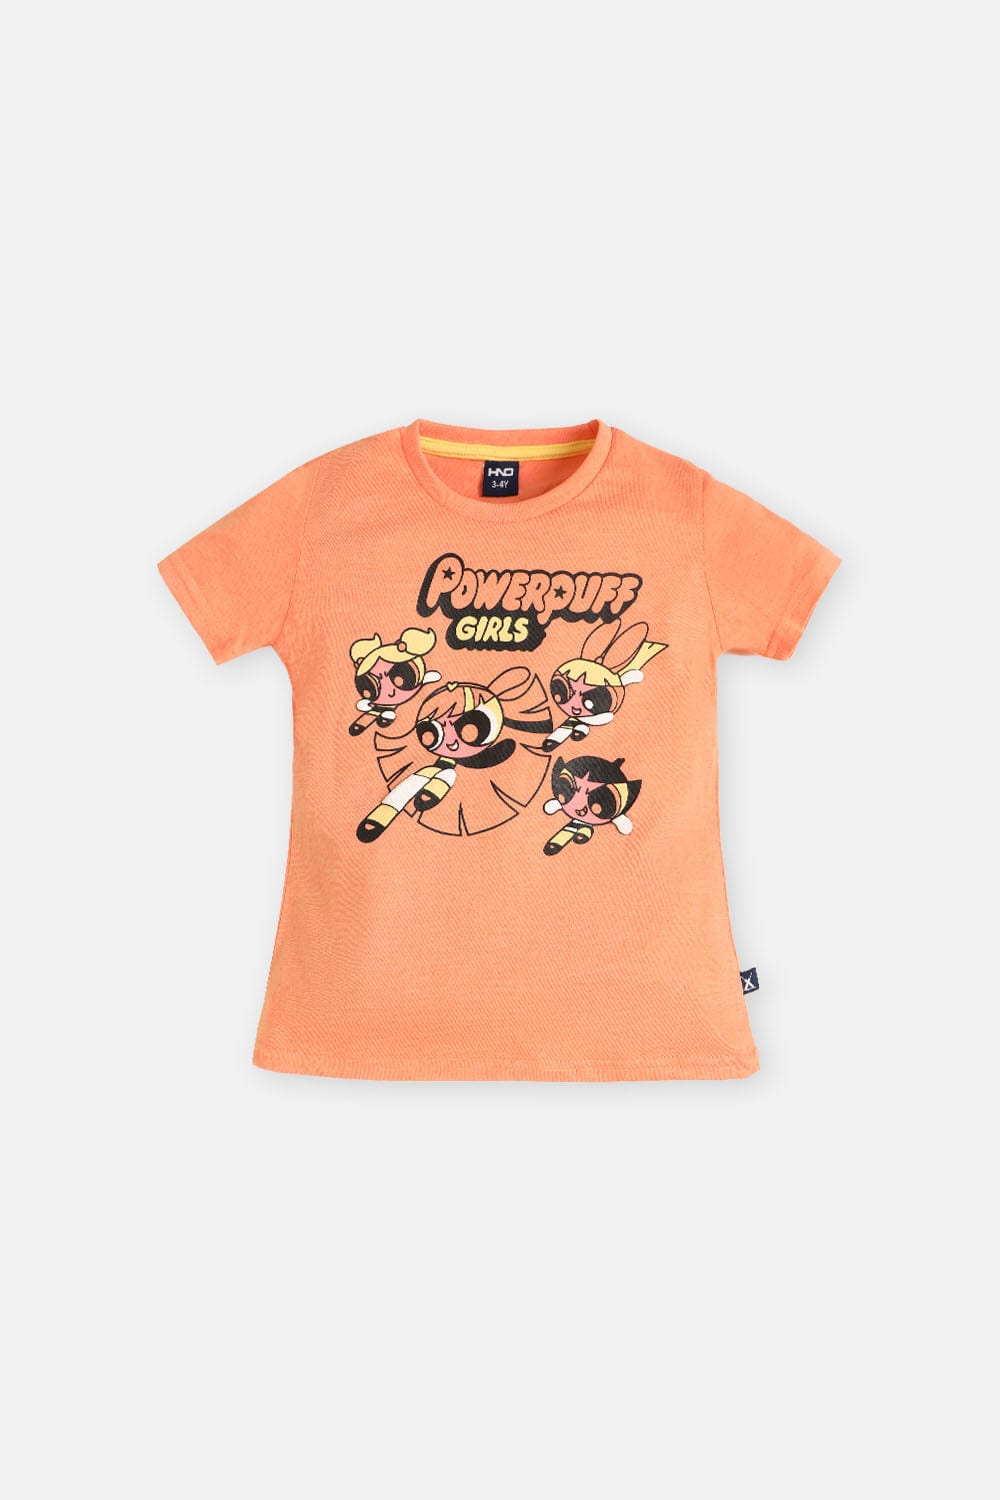 Hope Not Out by Shahid Afridi Girls Knit T-Shirt Girls Orange Powerpuff Girls T-Shirt